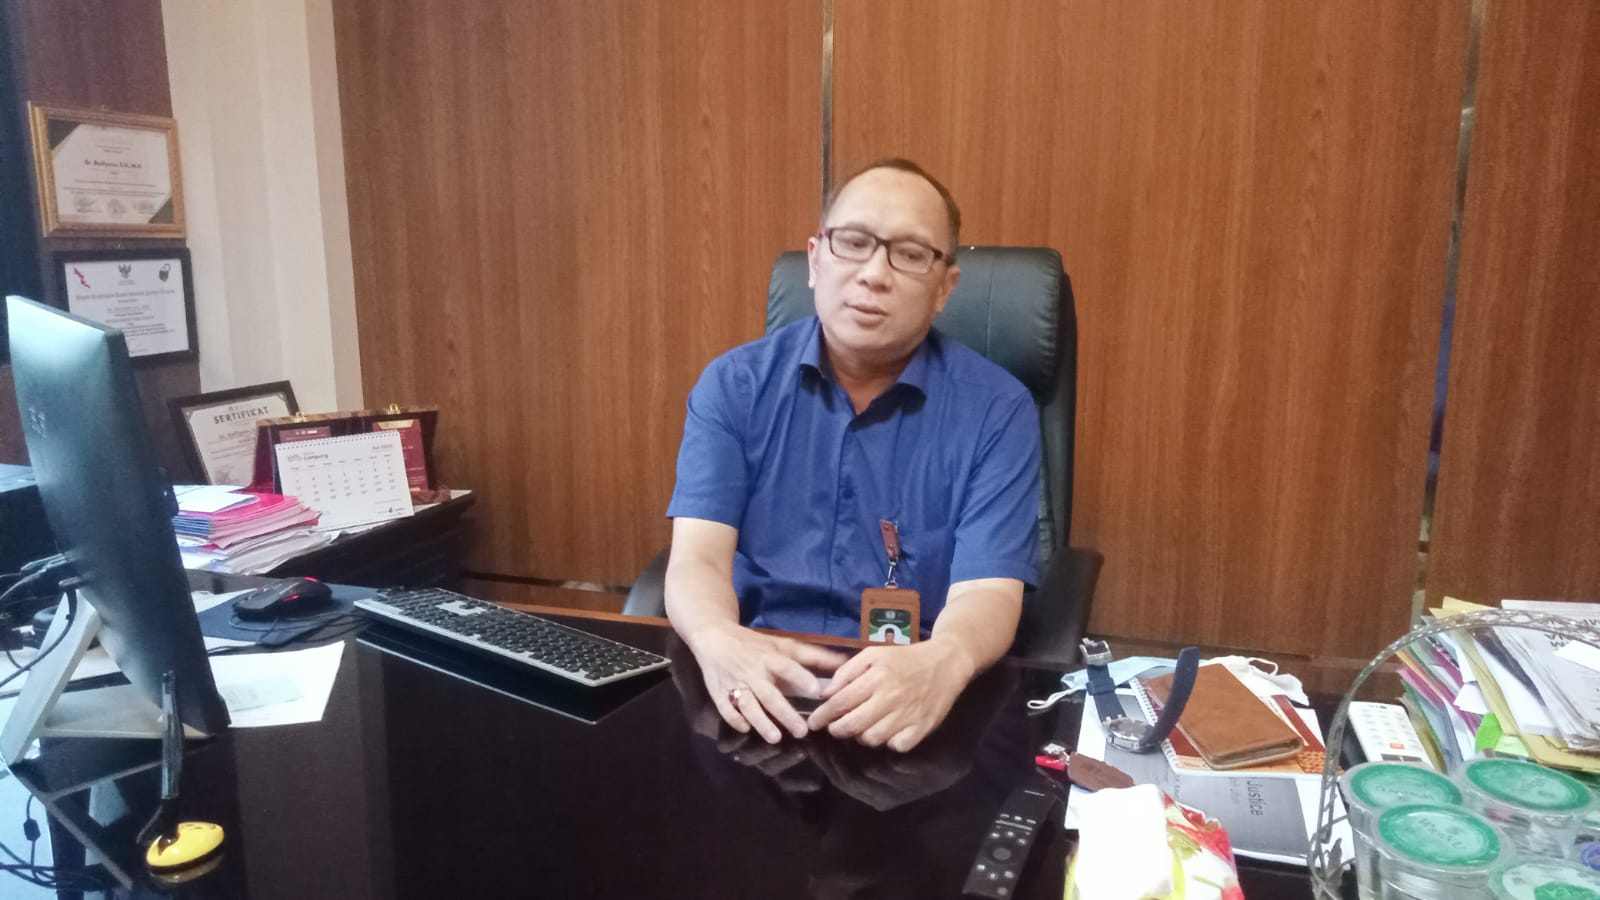 Pejabat Definitif Tak Kunjung Dilantik, Budiono: Jabatan Plt Sudah Expired